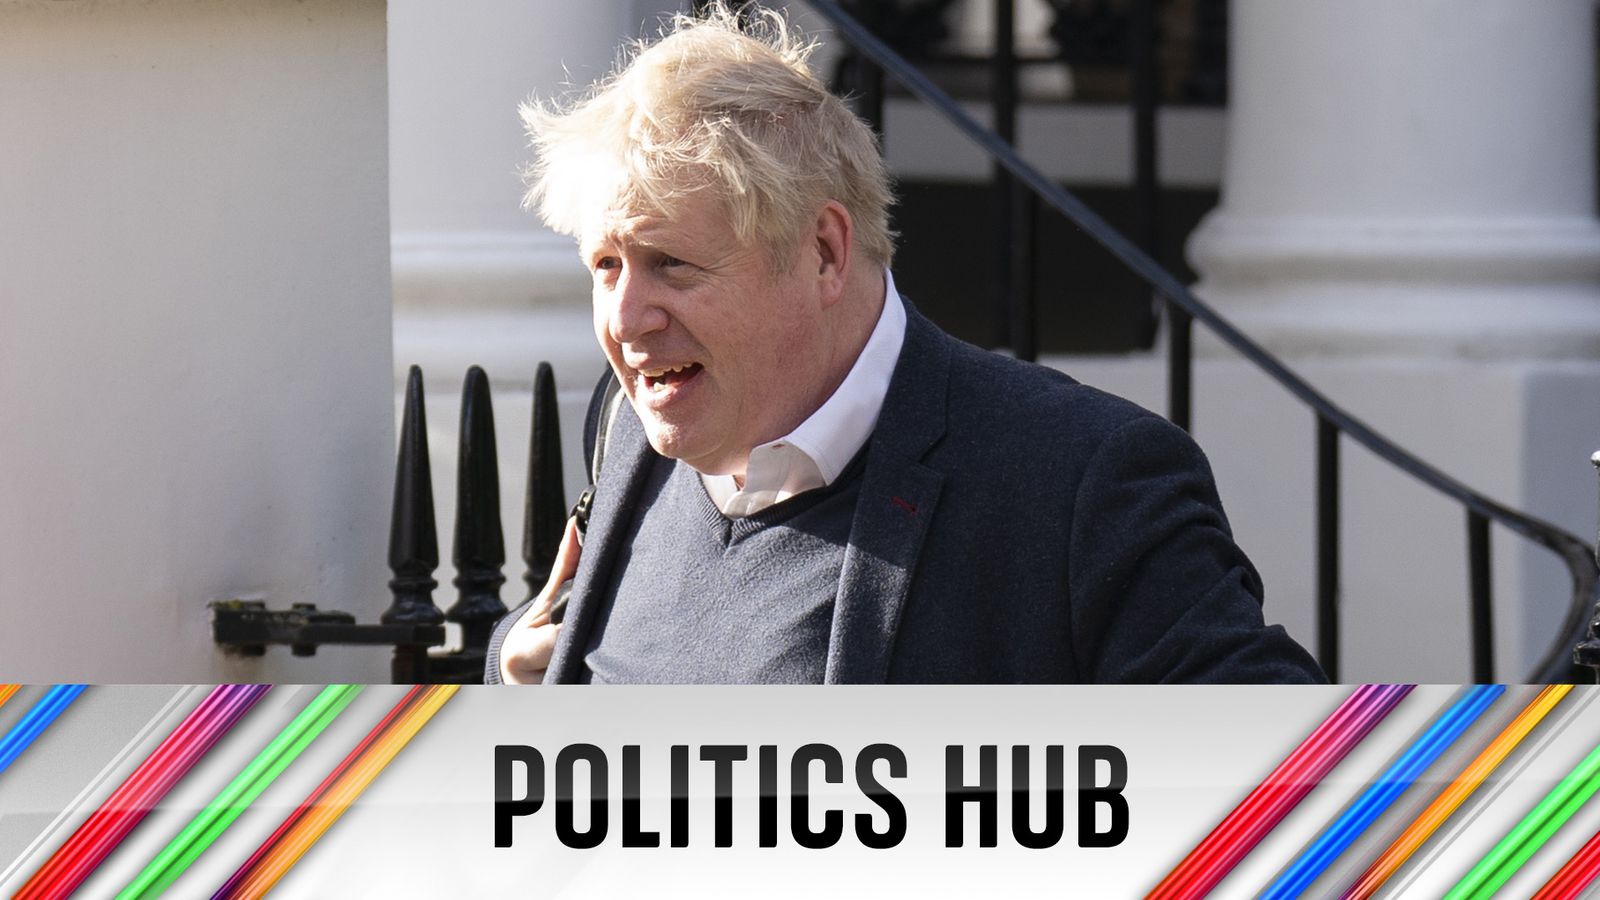 Politics latest: Health secretary ‘wants to see Boris back’ as MP in next parliament; admits delay on new hospitals pledge | Politics News